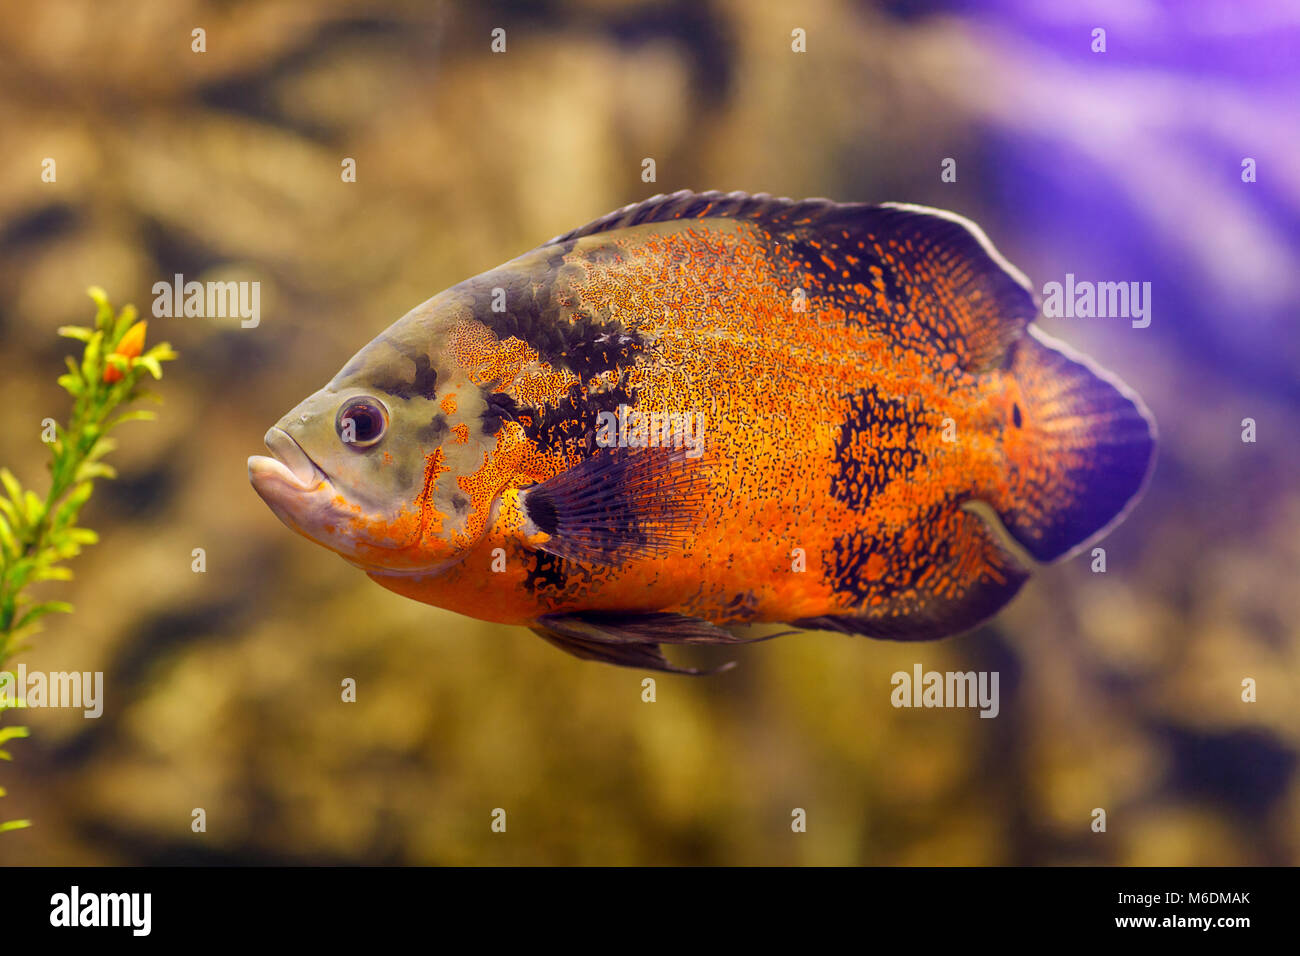 Fish in fresh Aquarium. Oscar fish Astronotus ocellatus swimming underwater. High resolution photo. Stock Photo